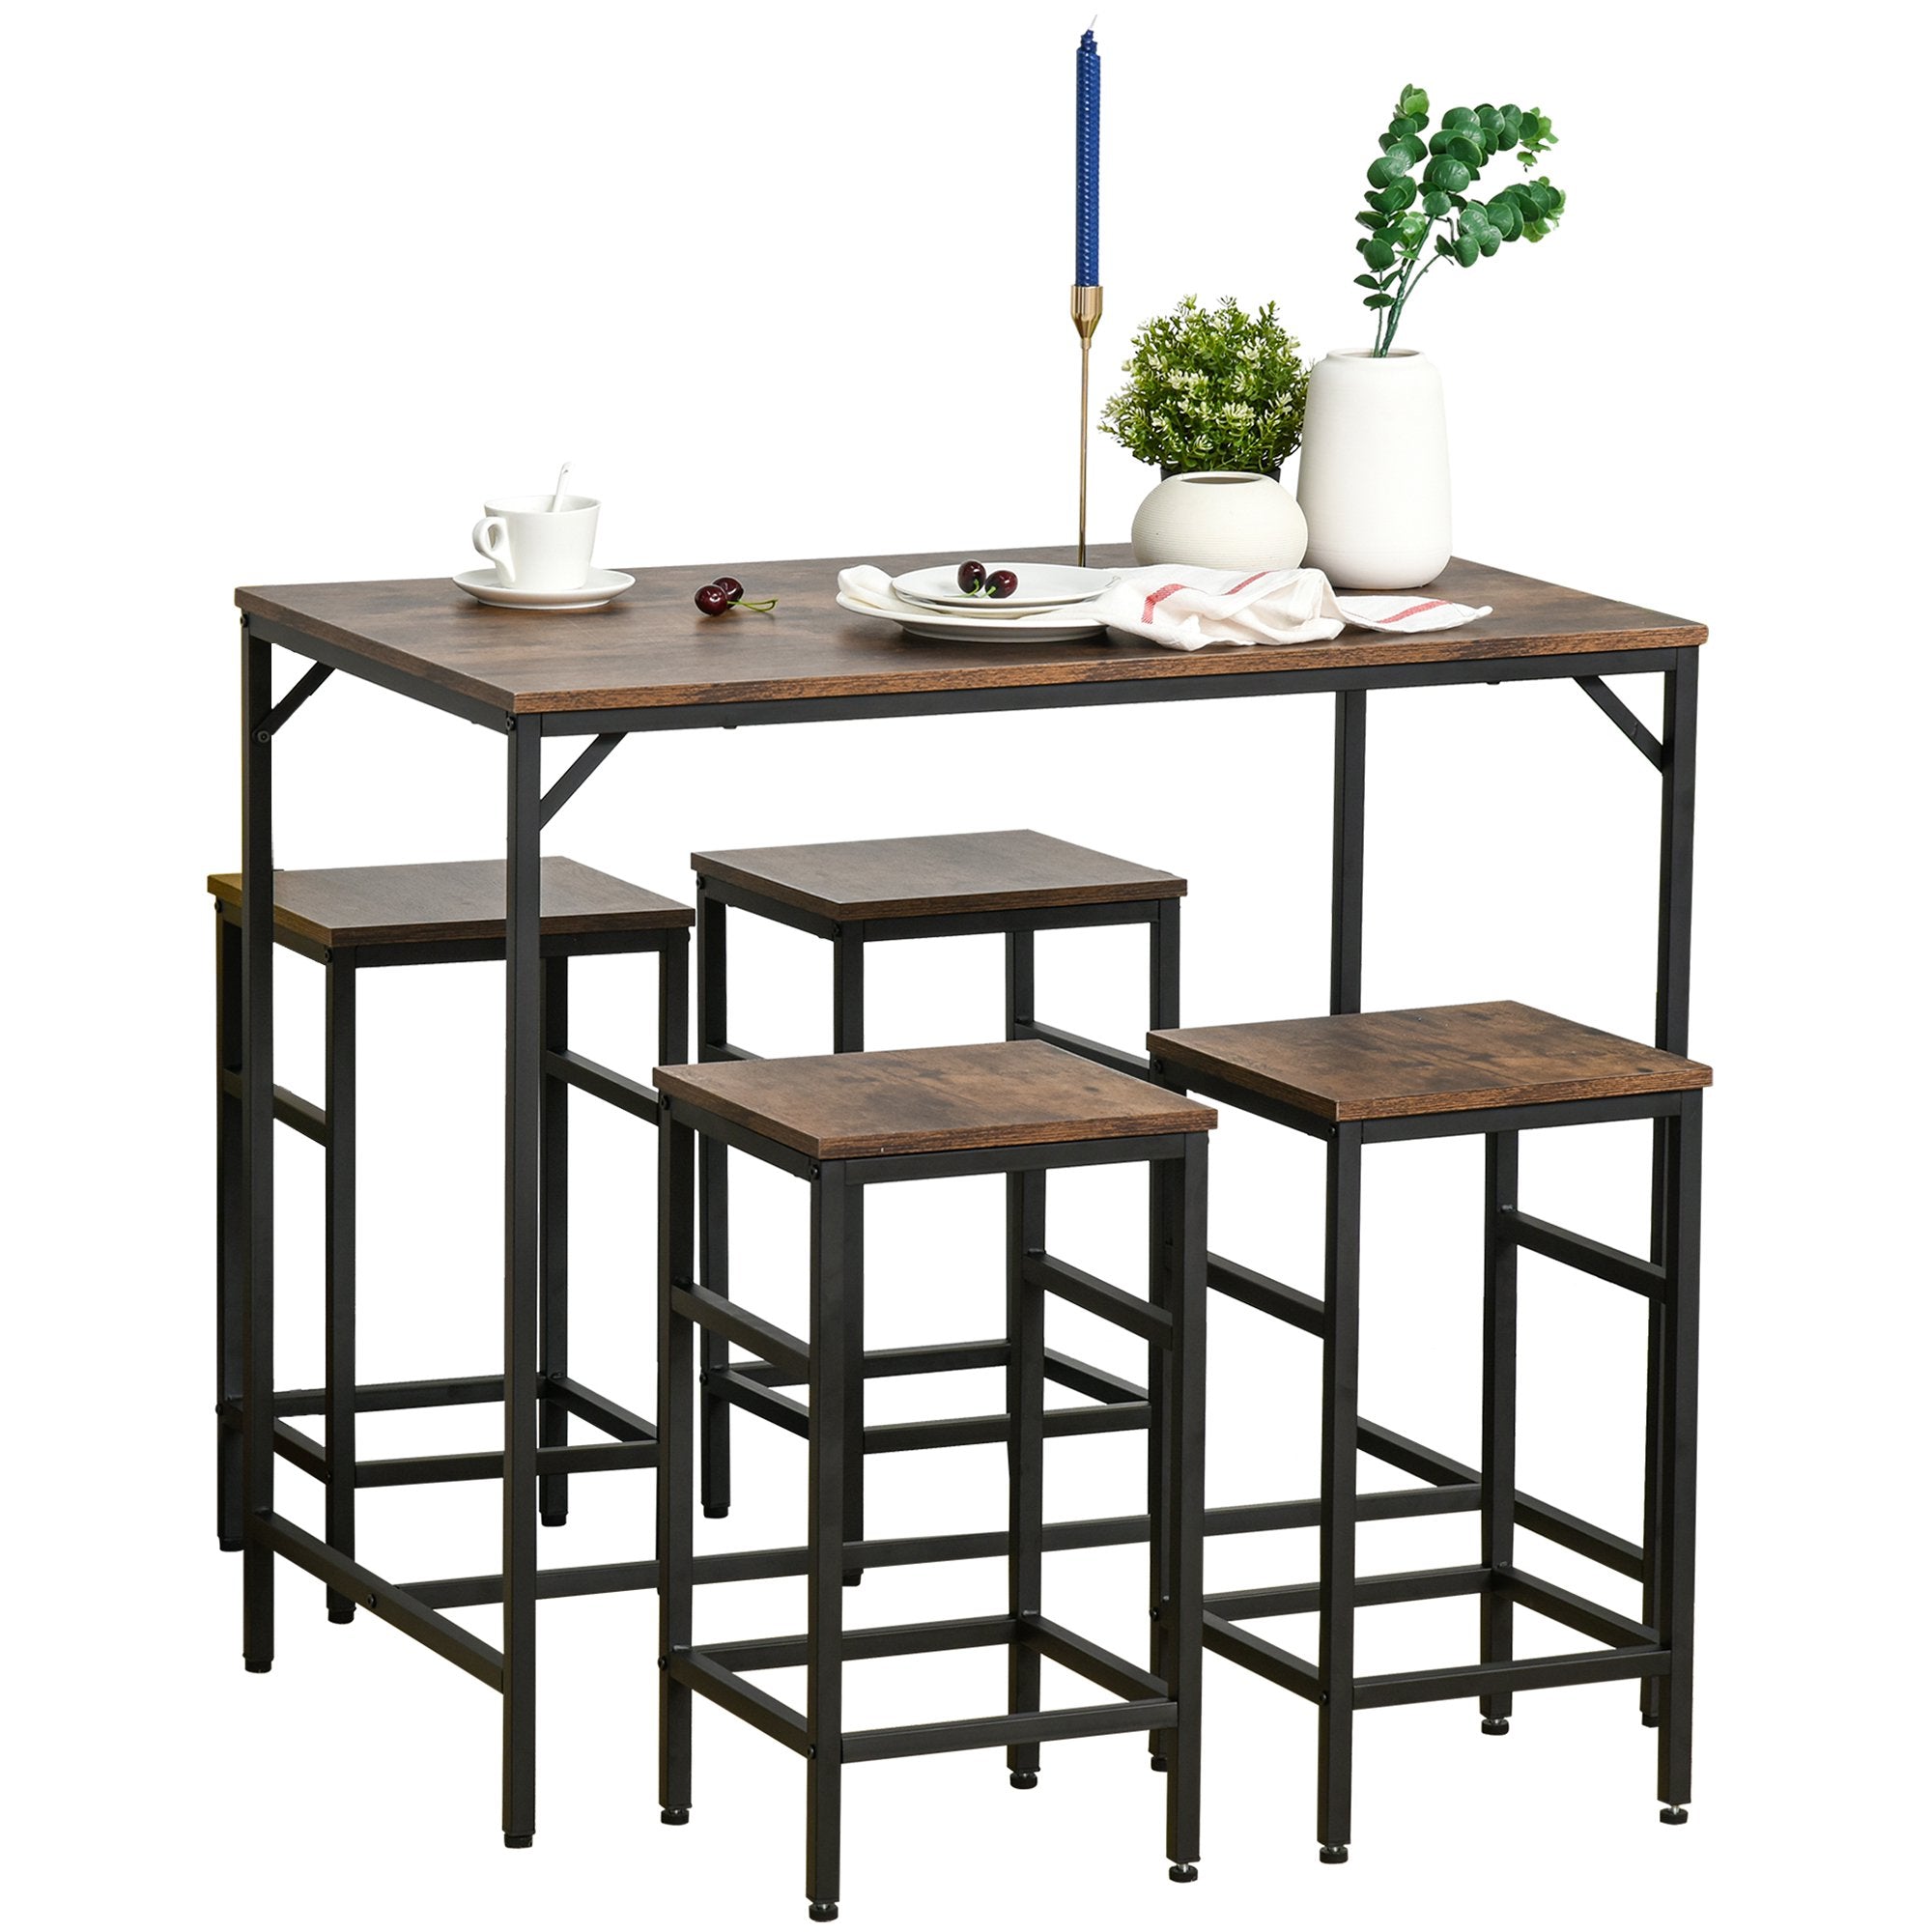 Nancy's Honaunau Bar Table Set - 4 Bar Stools - High Table - Steel - Brown - 100 x 60 x 88 cm